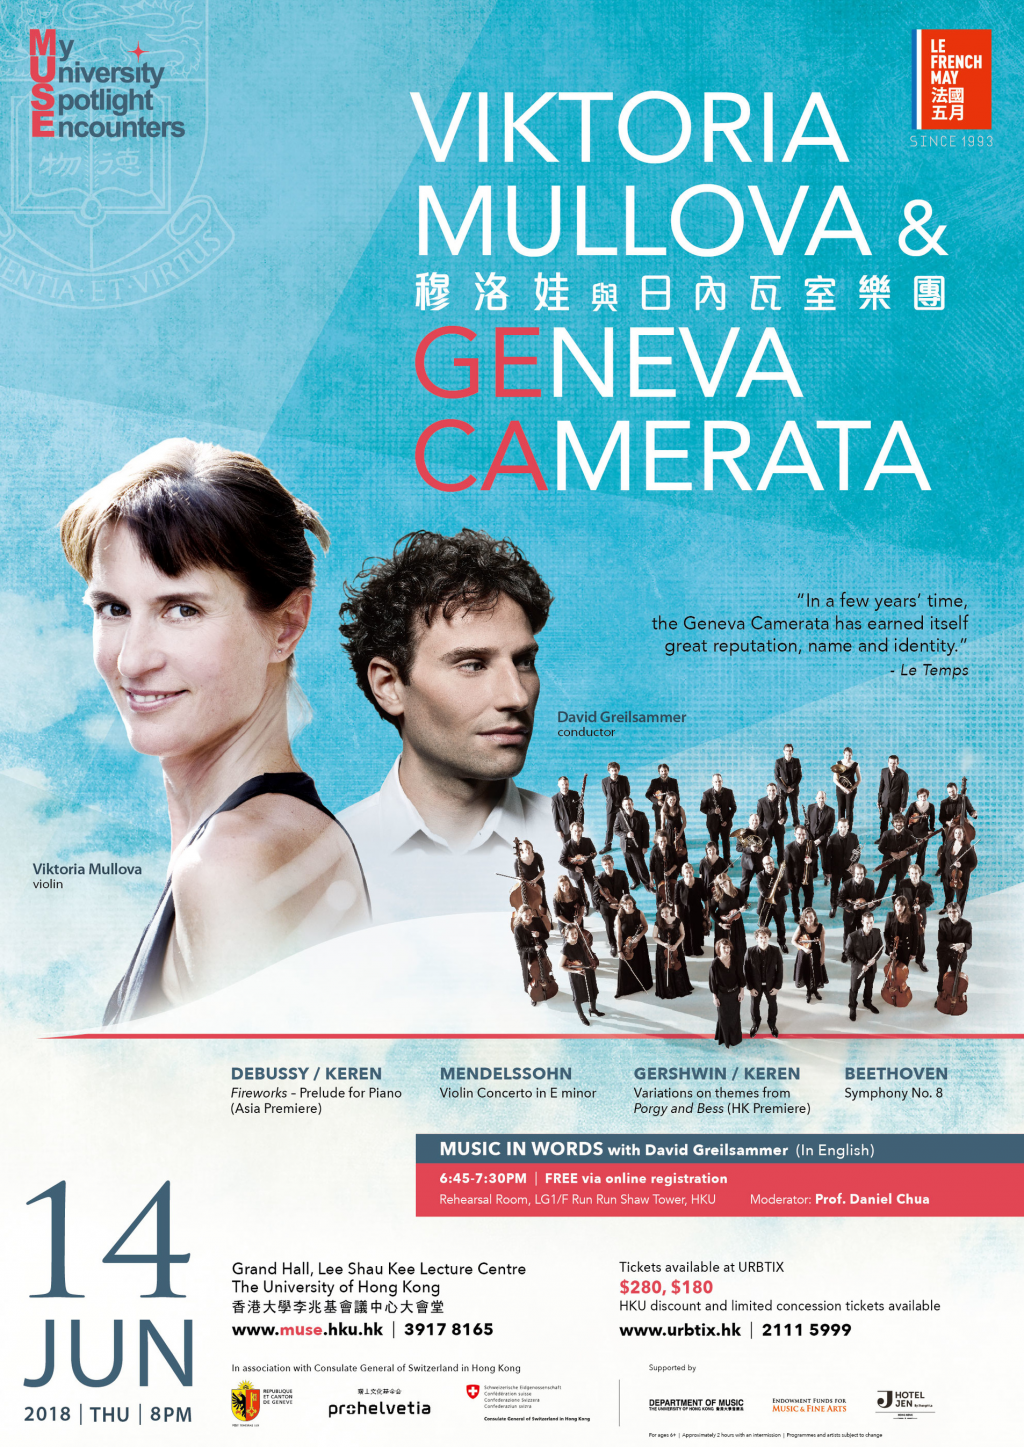 Legendary violinist Viktoria Mullova & Geneva Camerata